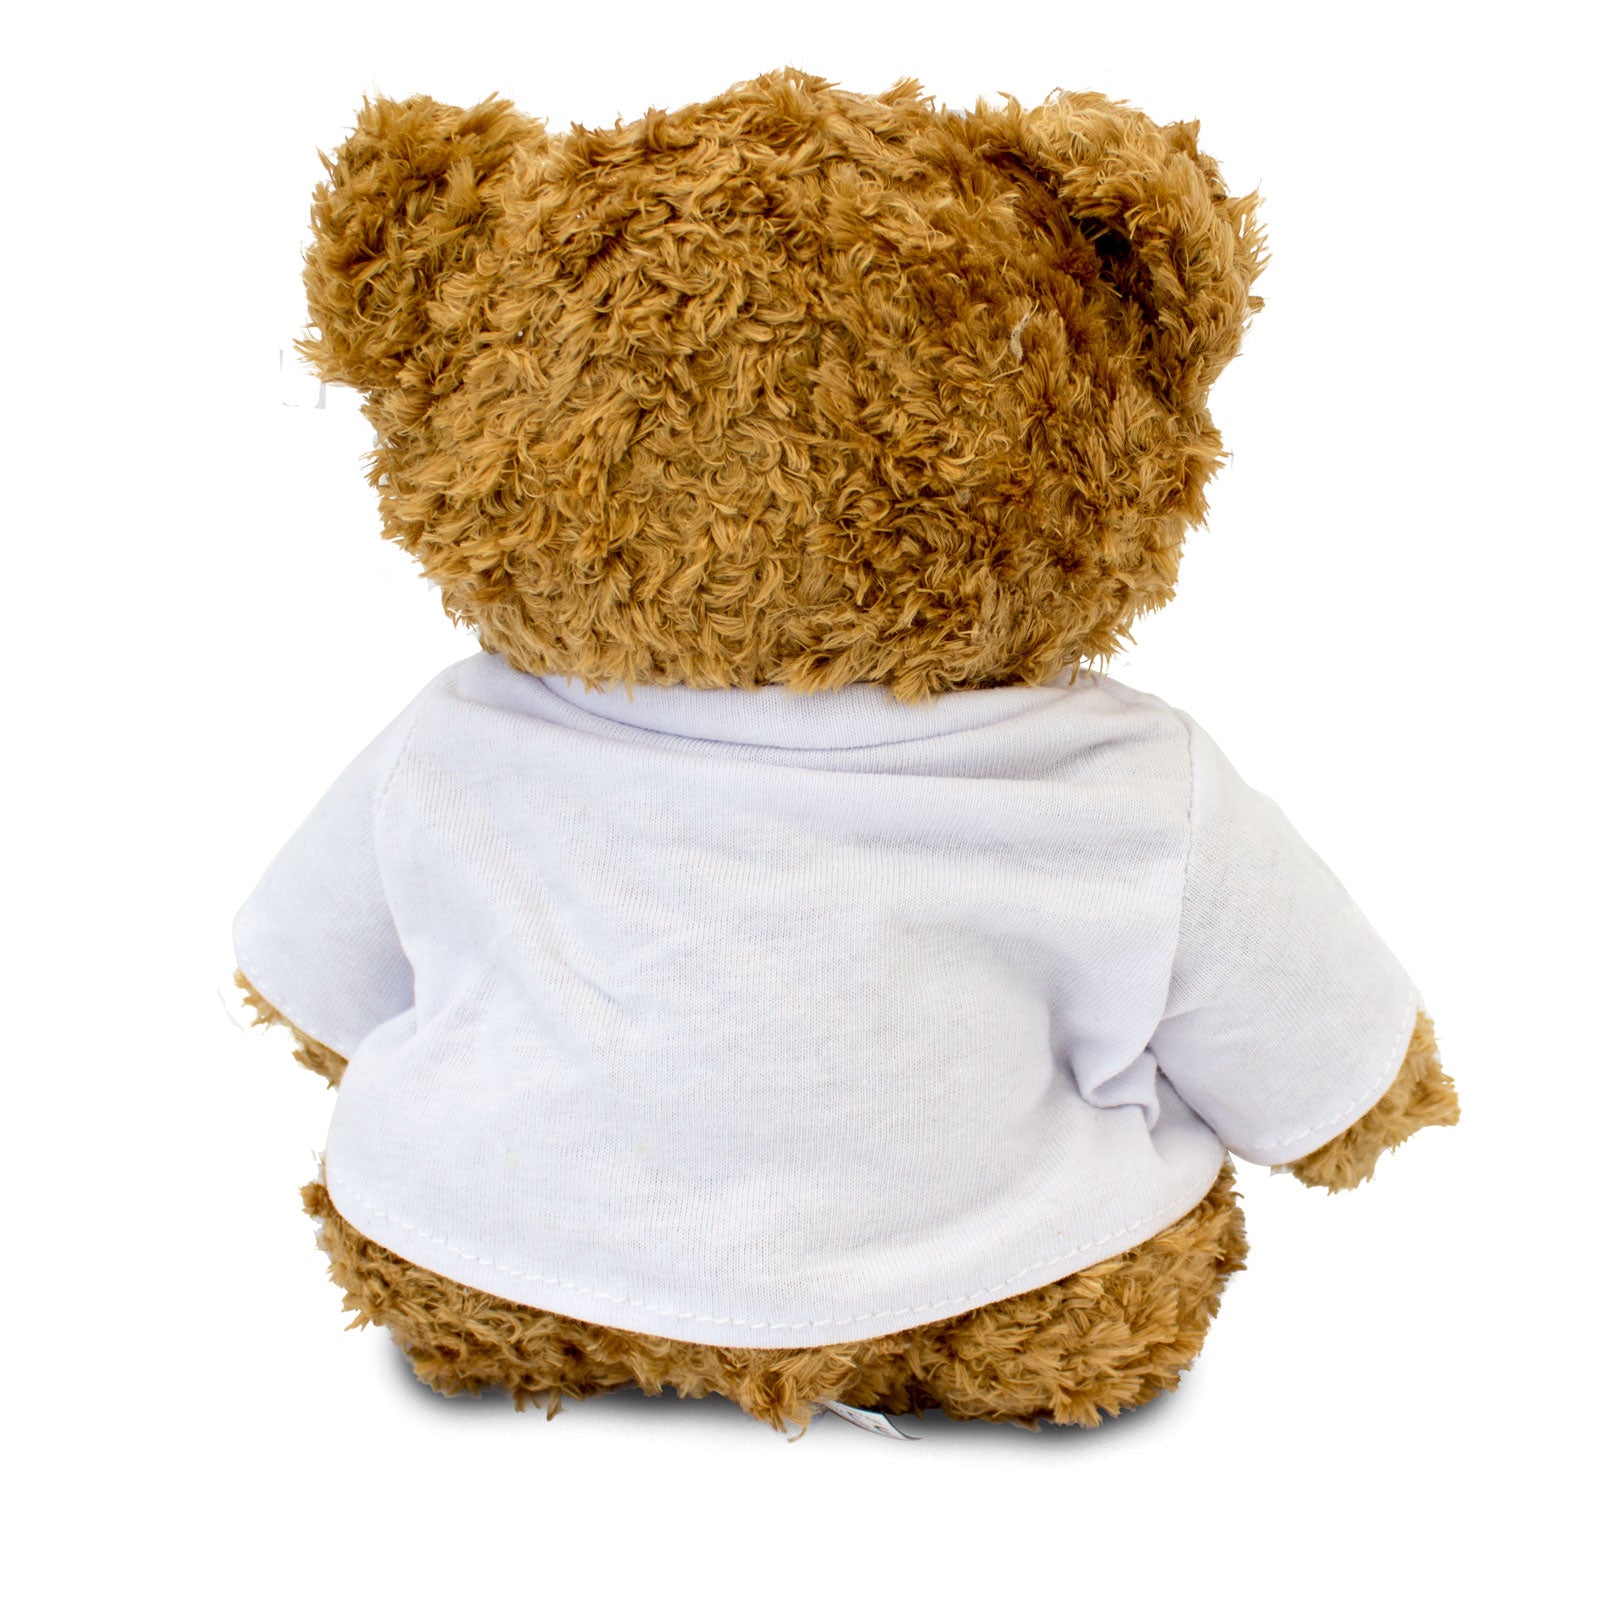 Get Well Soon Amira - Teddy Bear